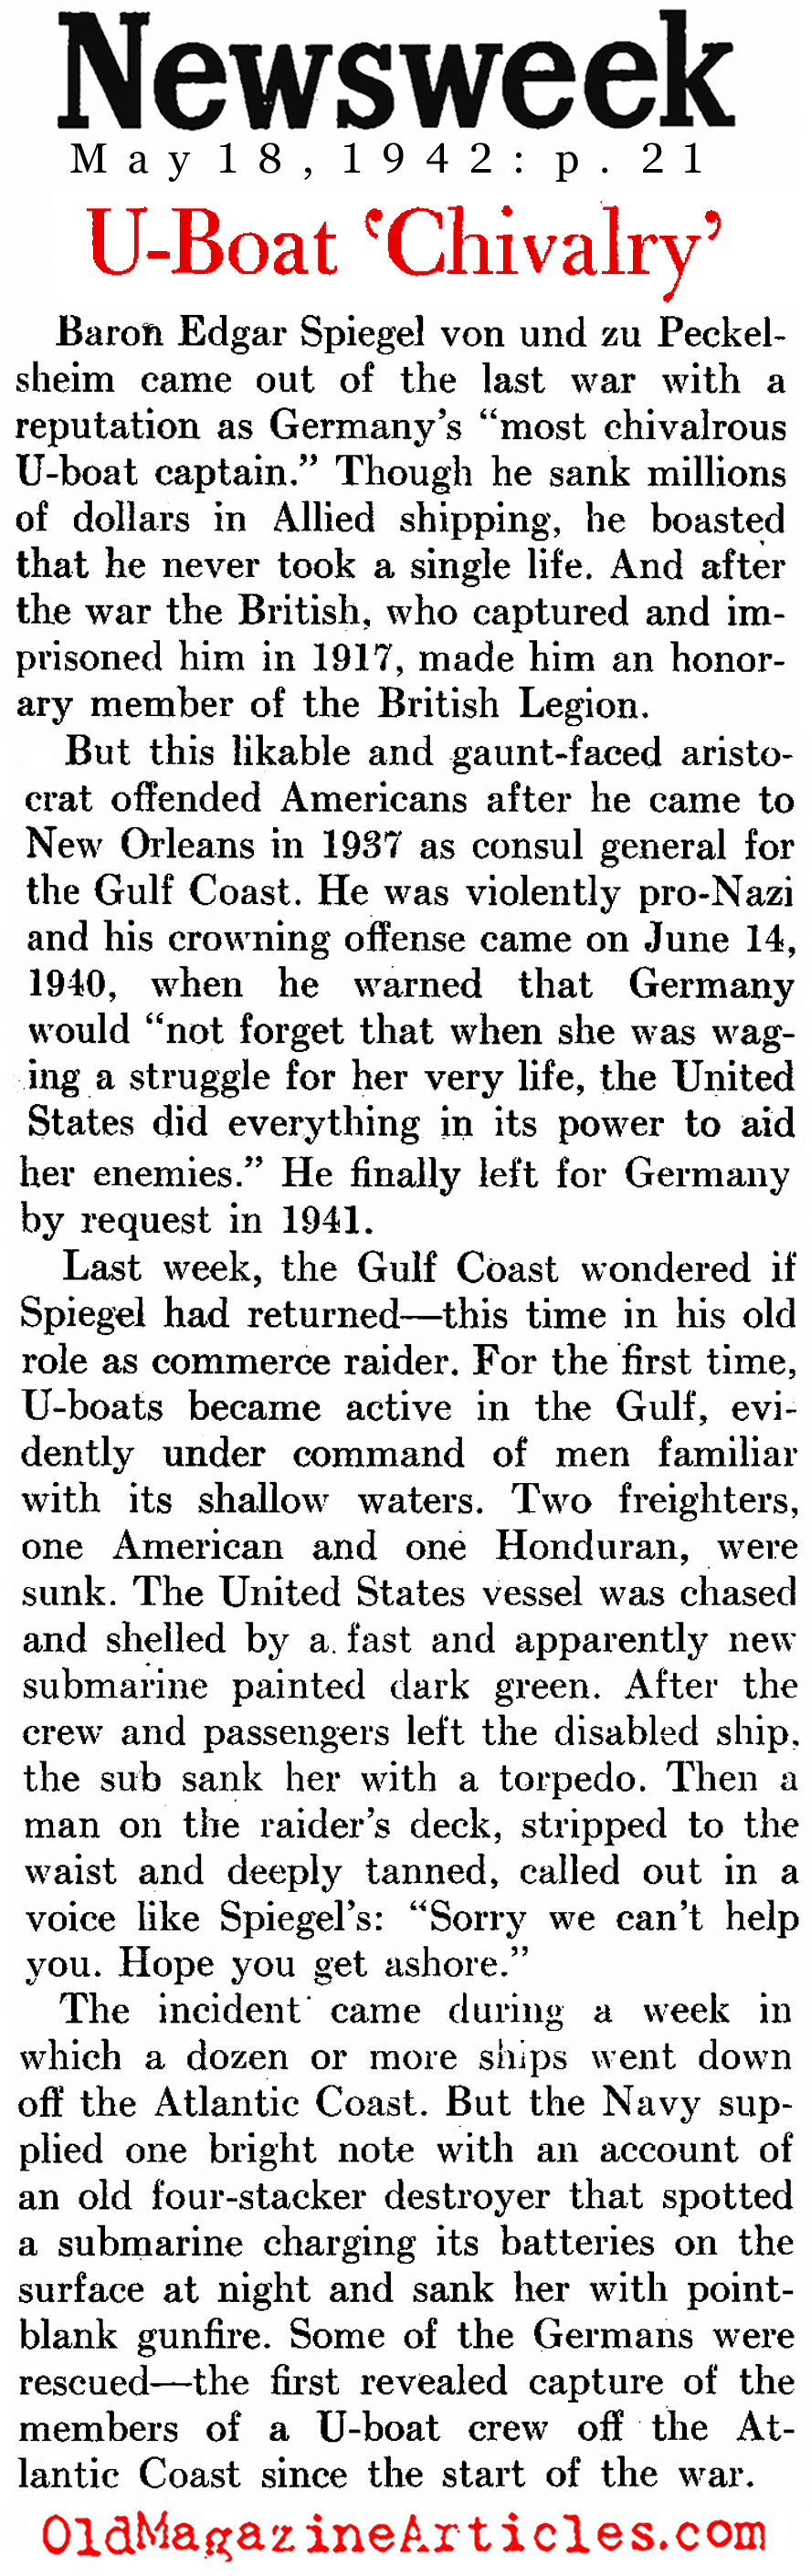 U-507 In The Gulf of Mexico (Newsweek Magazine, 1942)